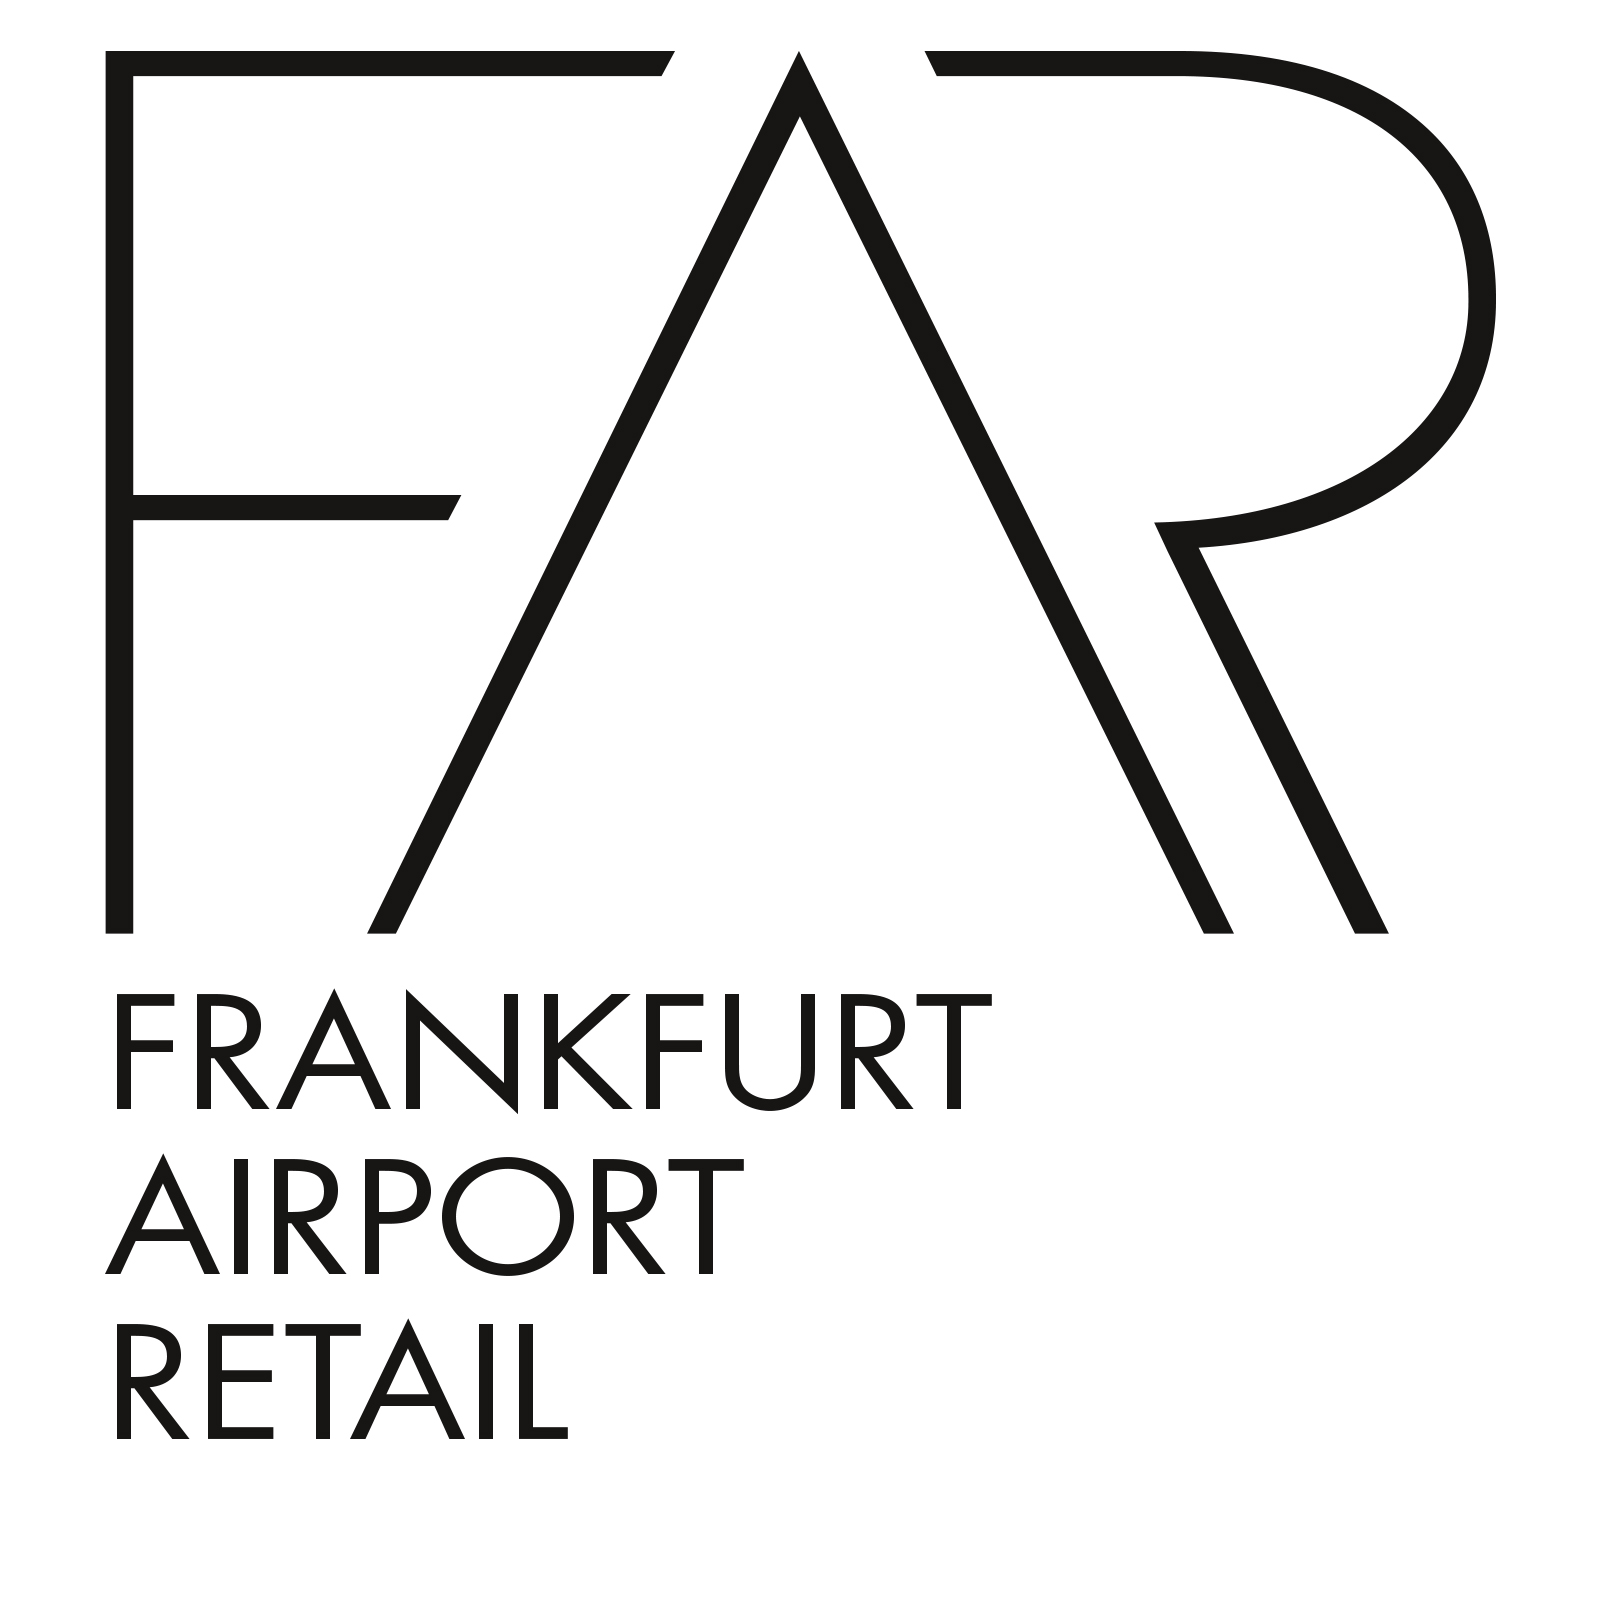 Frankfurt Airport Retail GmbH & Co. KG Logo